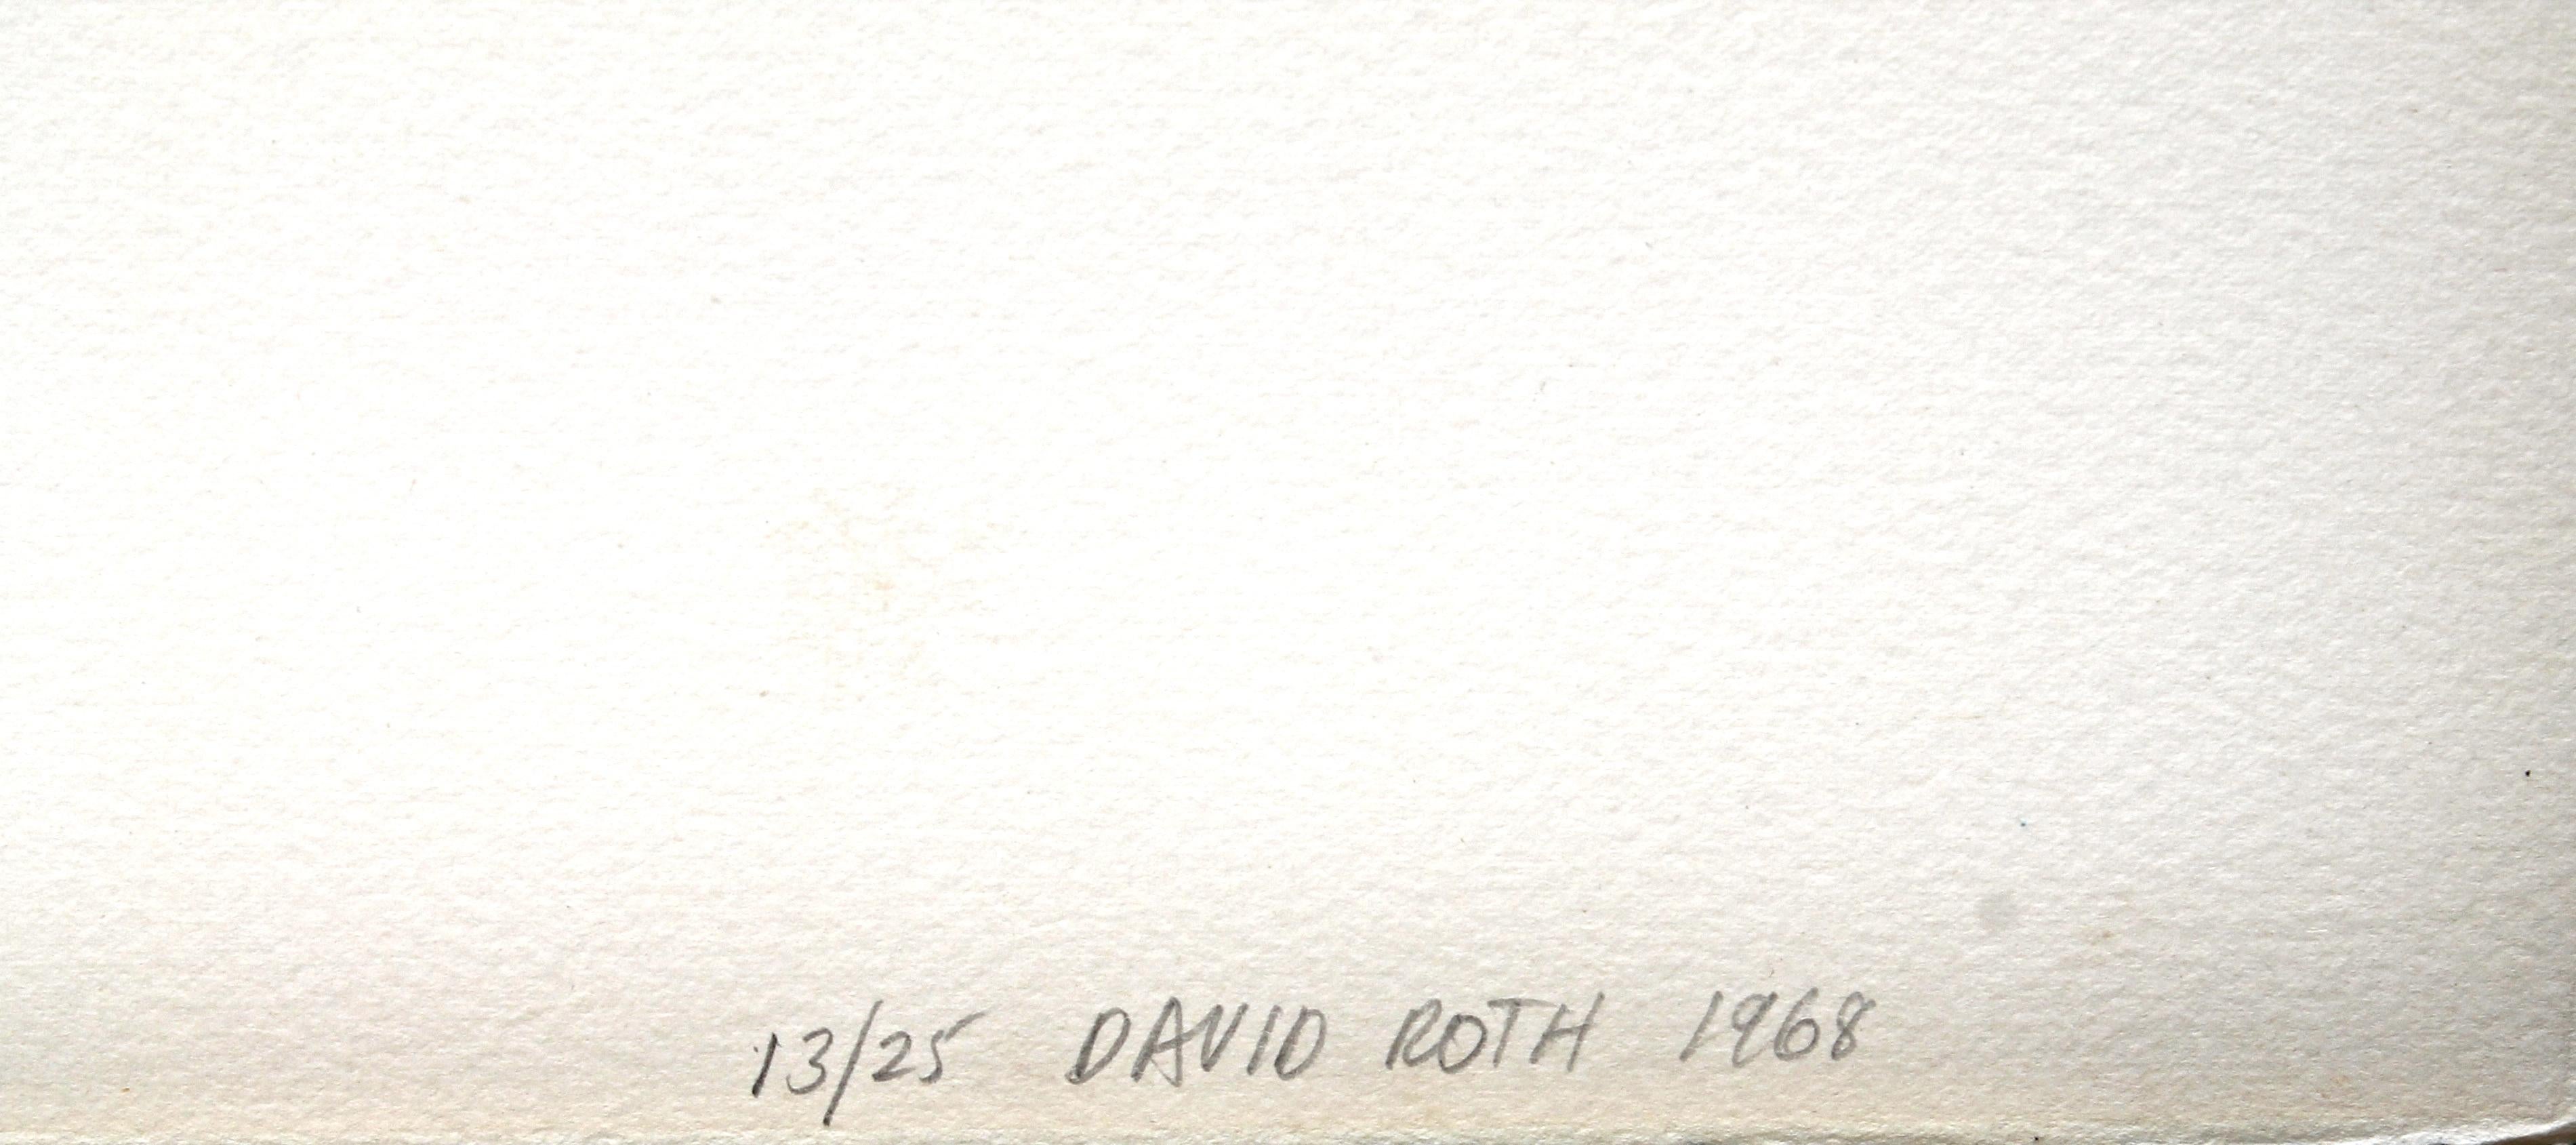 American David Roth 1968 Original Archetype Screen Print